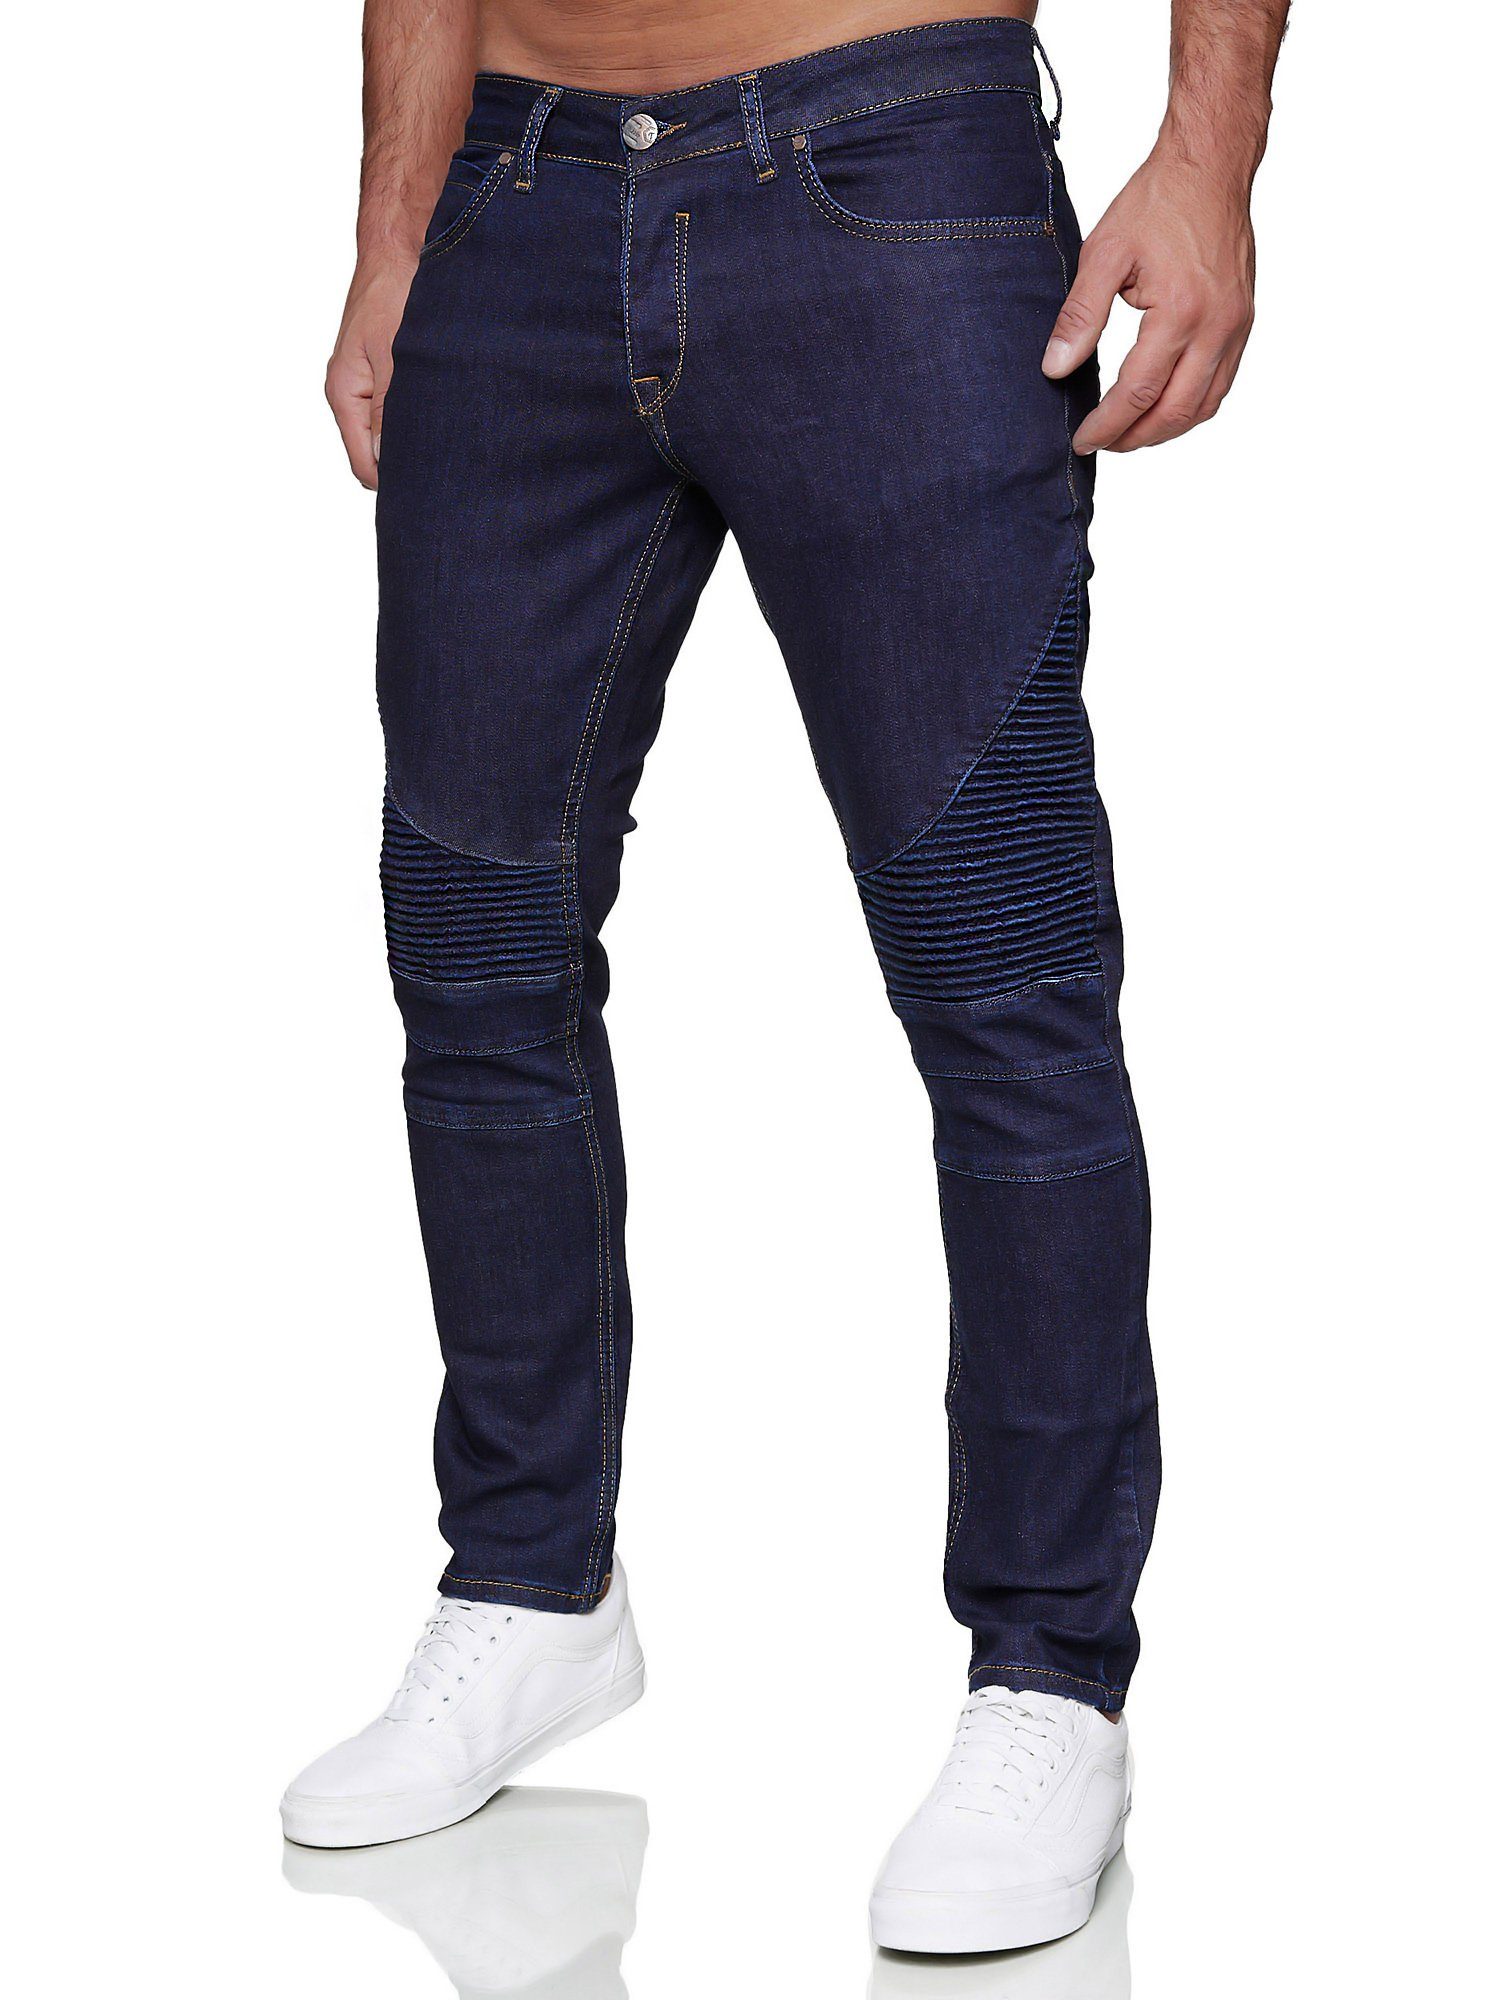 Tazzio Slim-fit-Jeans 16517 in cooler Biker-Optik dunkelblau